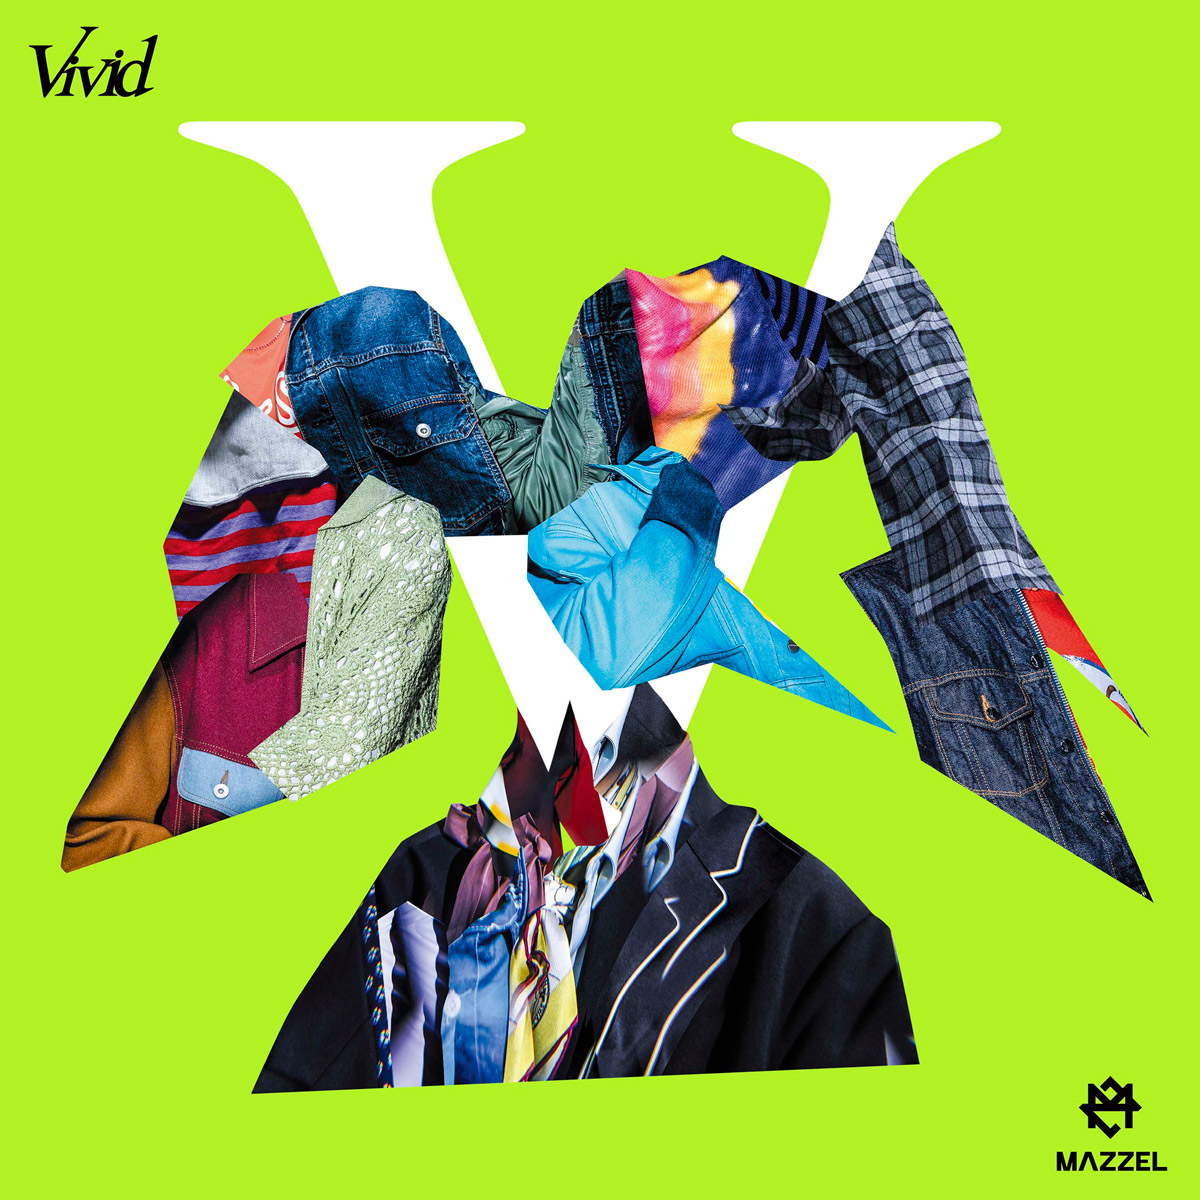 MAZZELのデビュー曲「Vivid」のジャケット